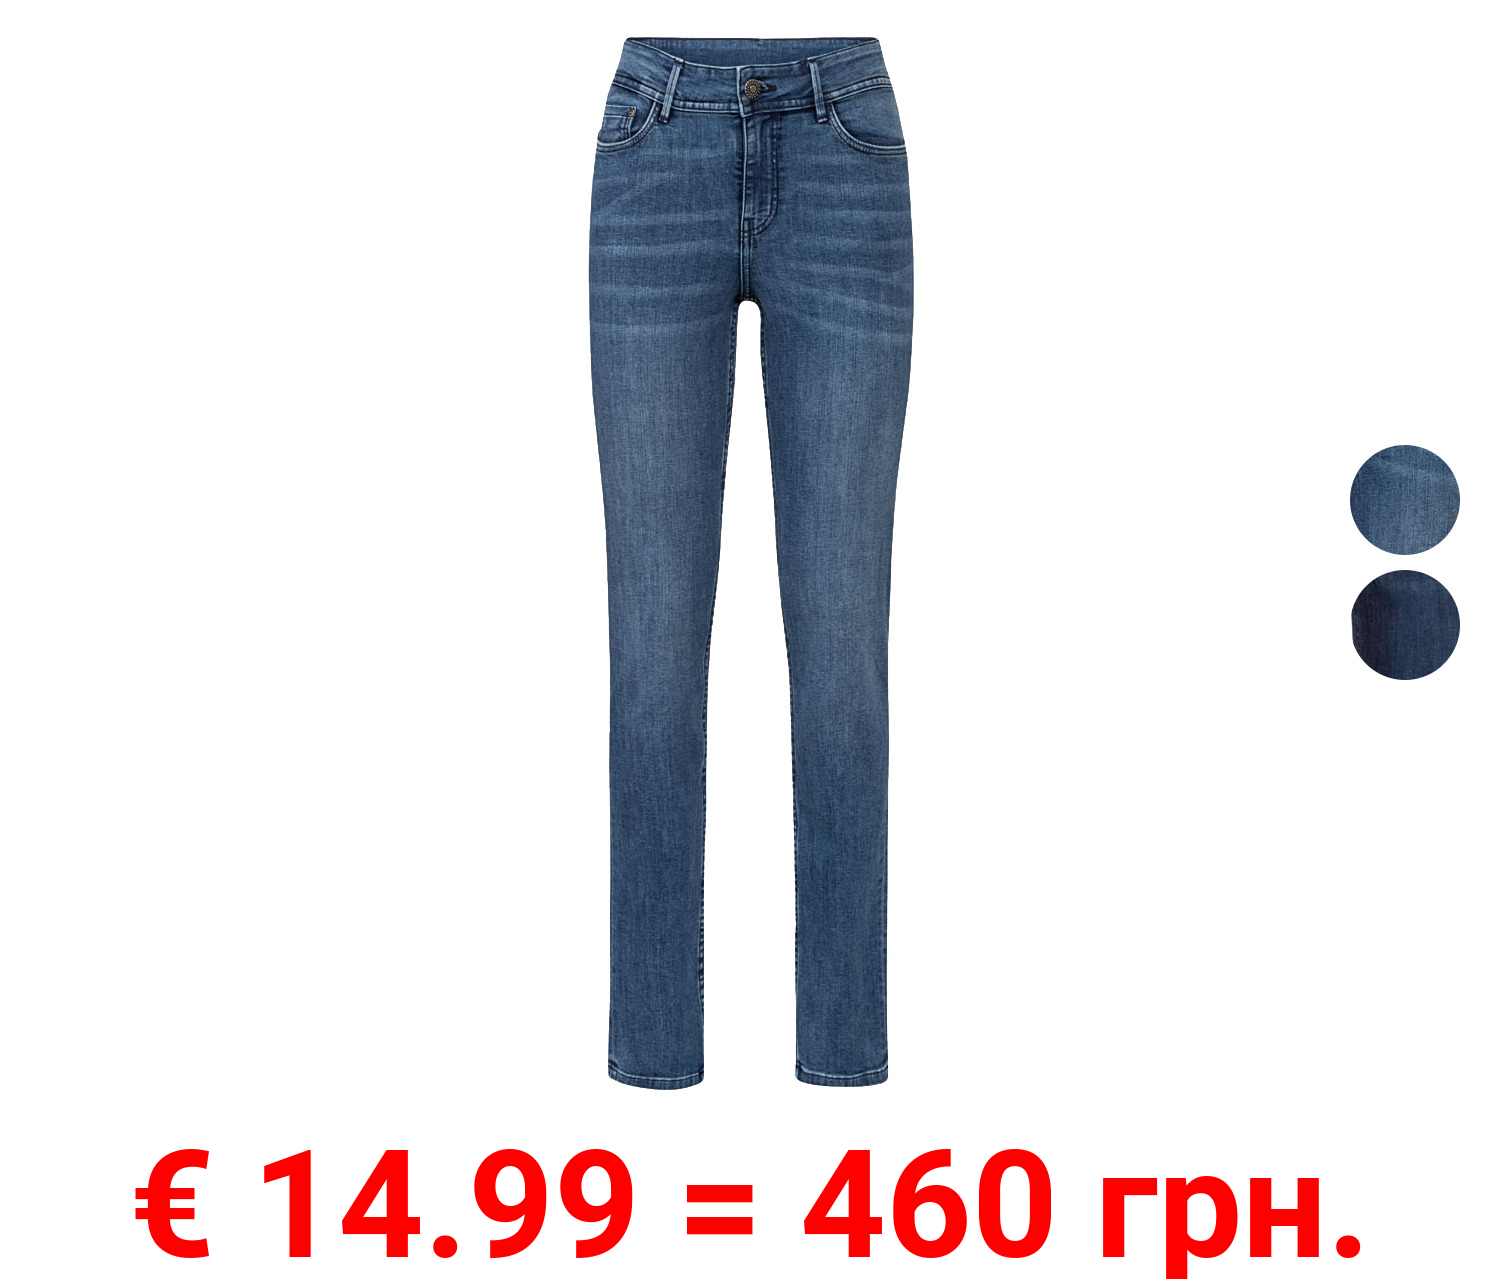 ESMARA® Jeans Damen, Straight Fit